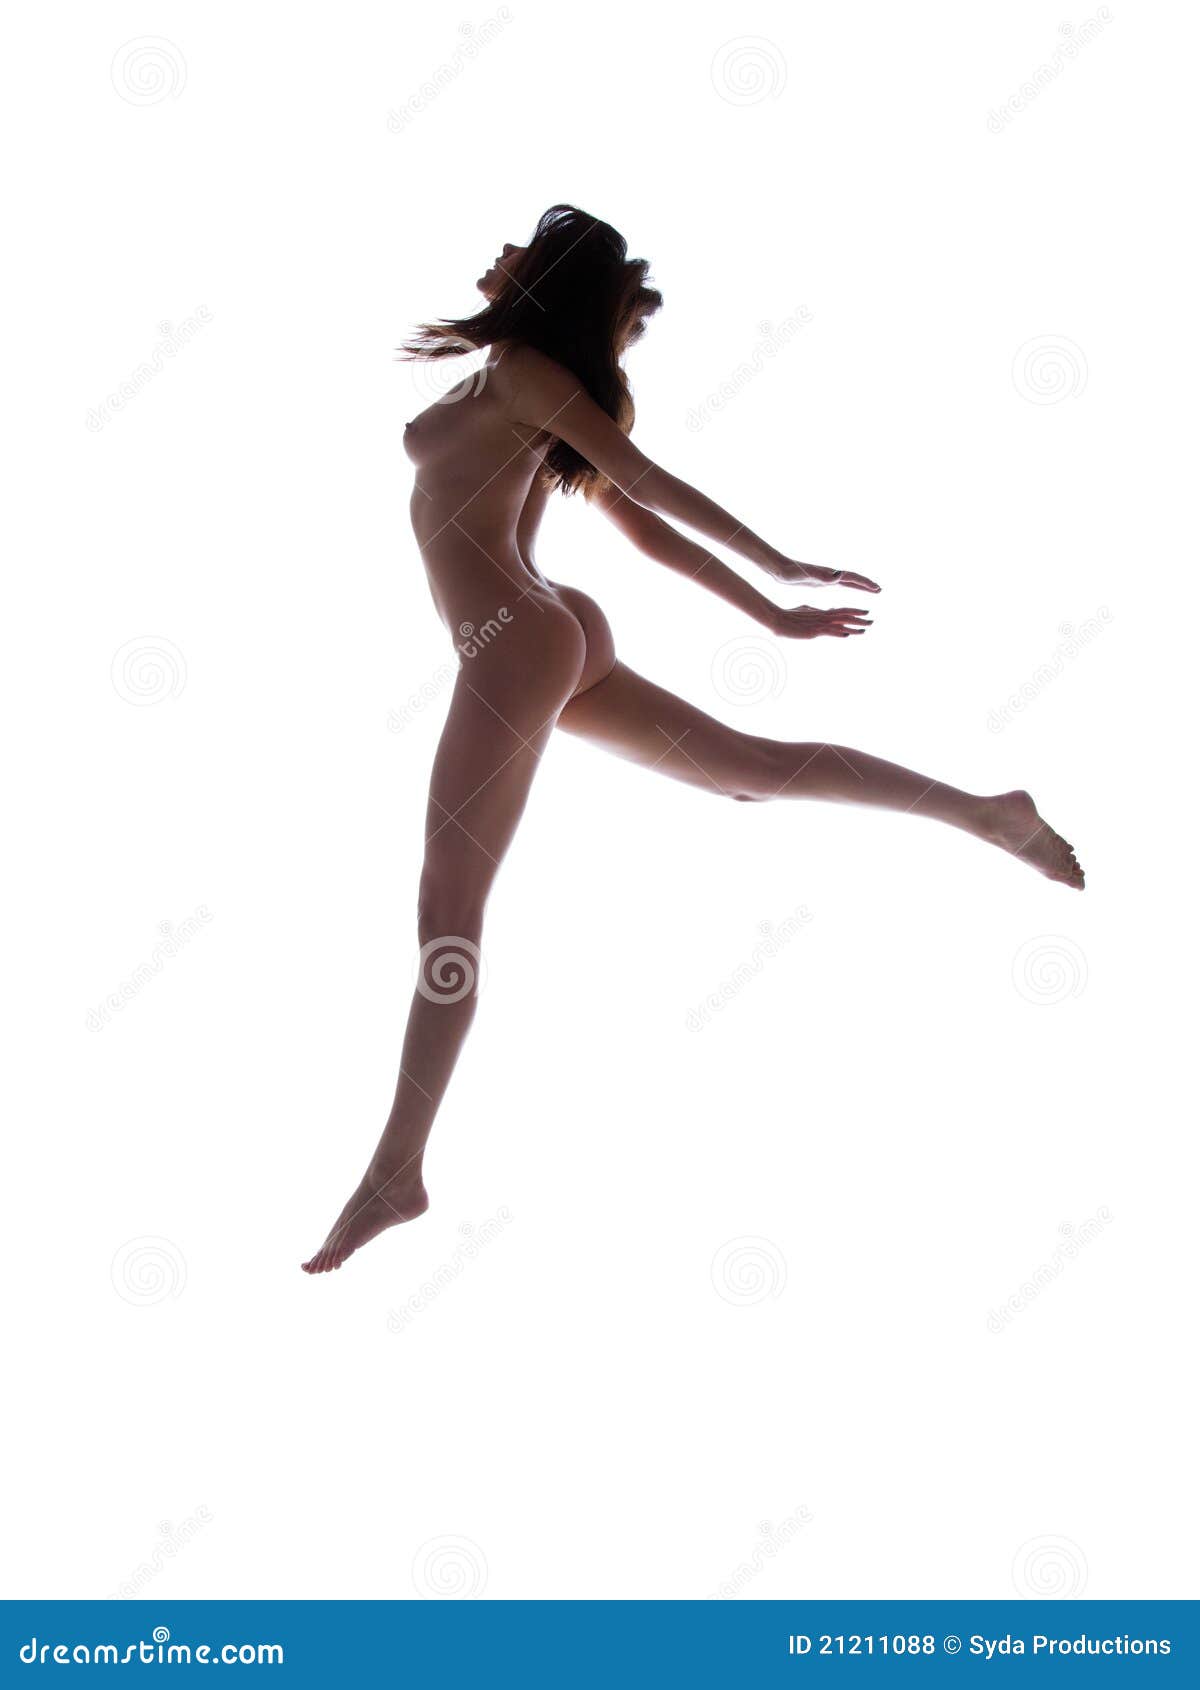 Nude Dancing Woman 8